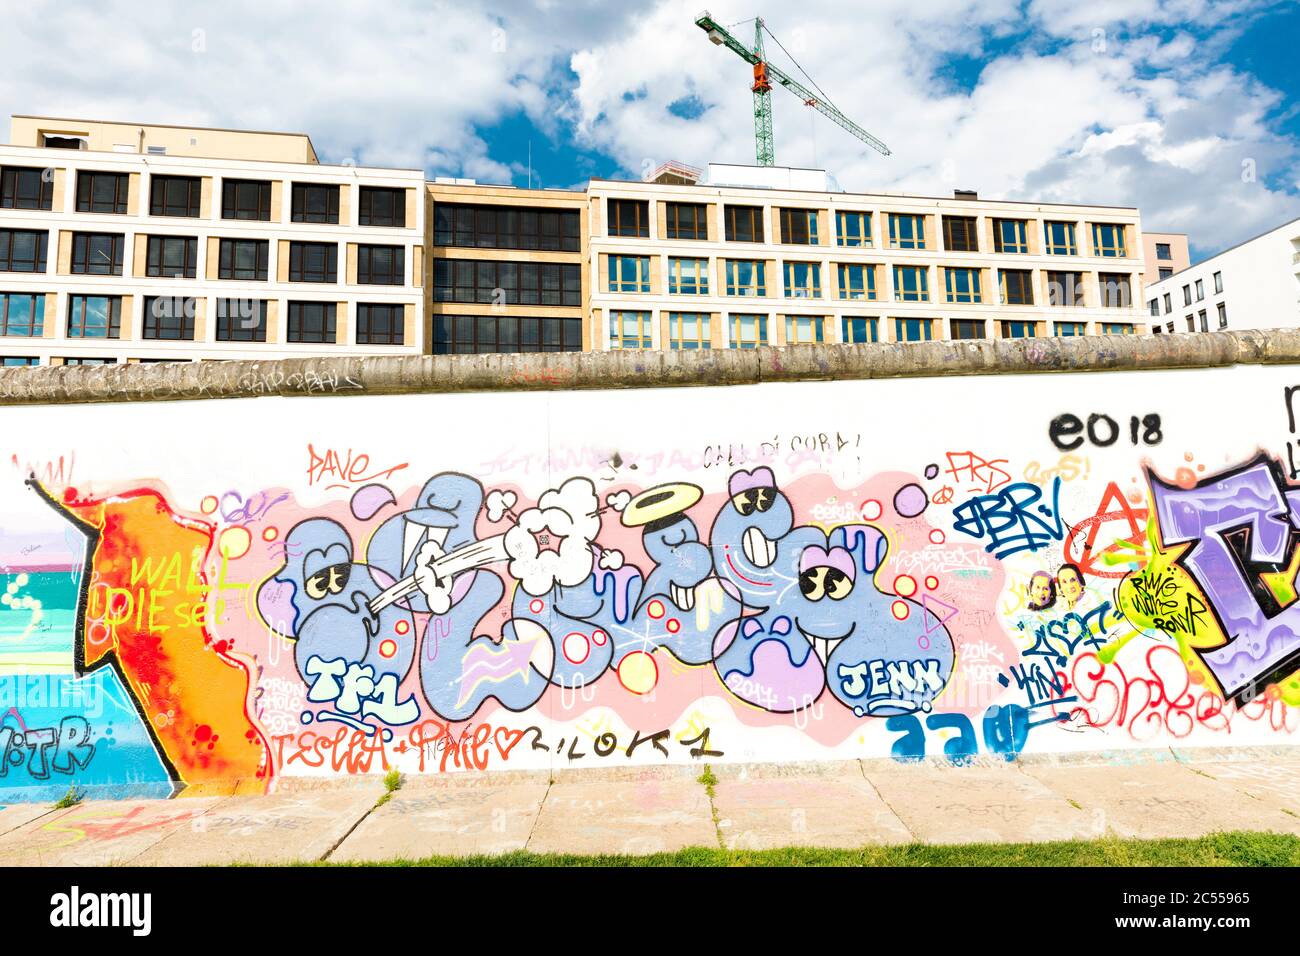 East Side Gallery, peinture murale, graffiti de l'ancien mur de Berlin, Friedrichshain, Berlin, Allemagne Banque D'Images